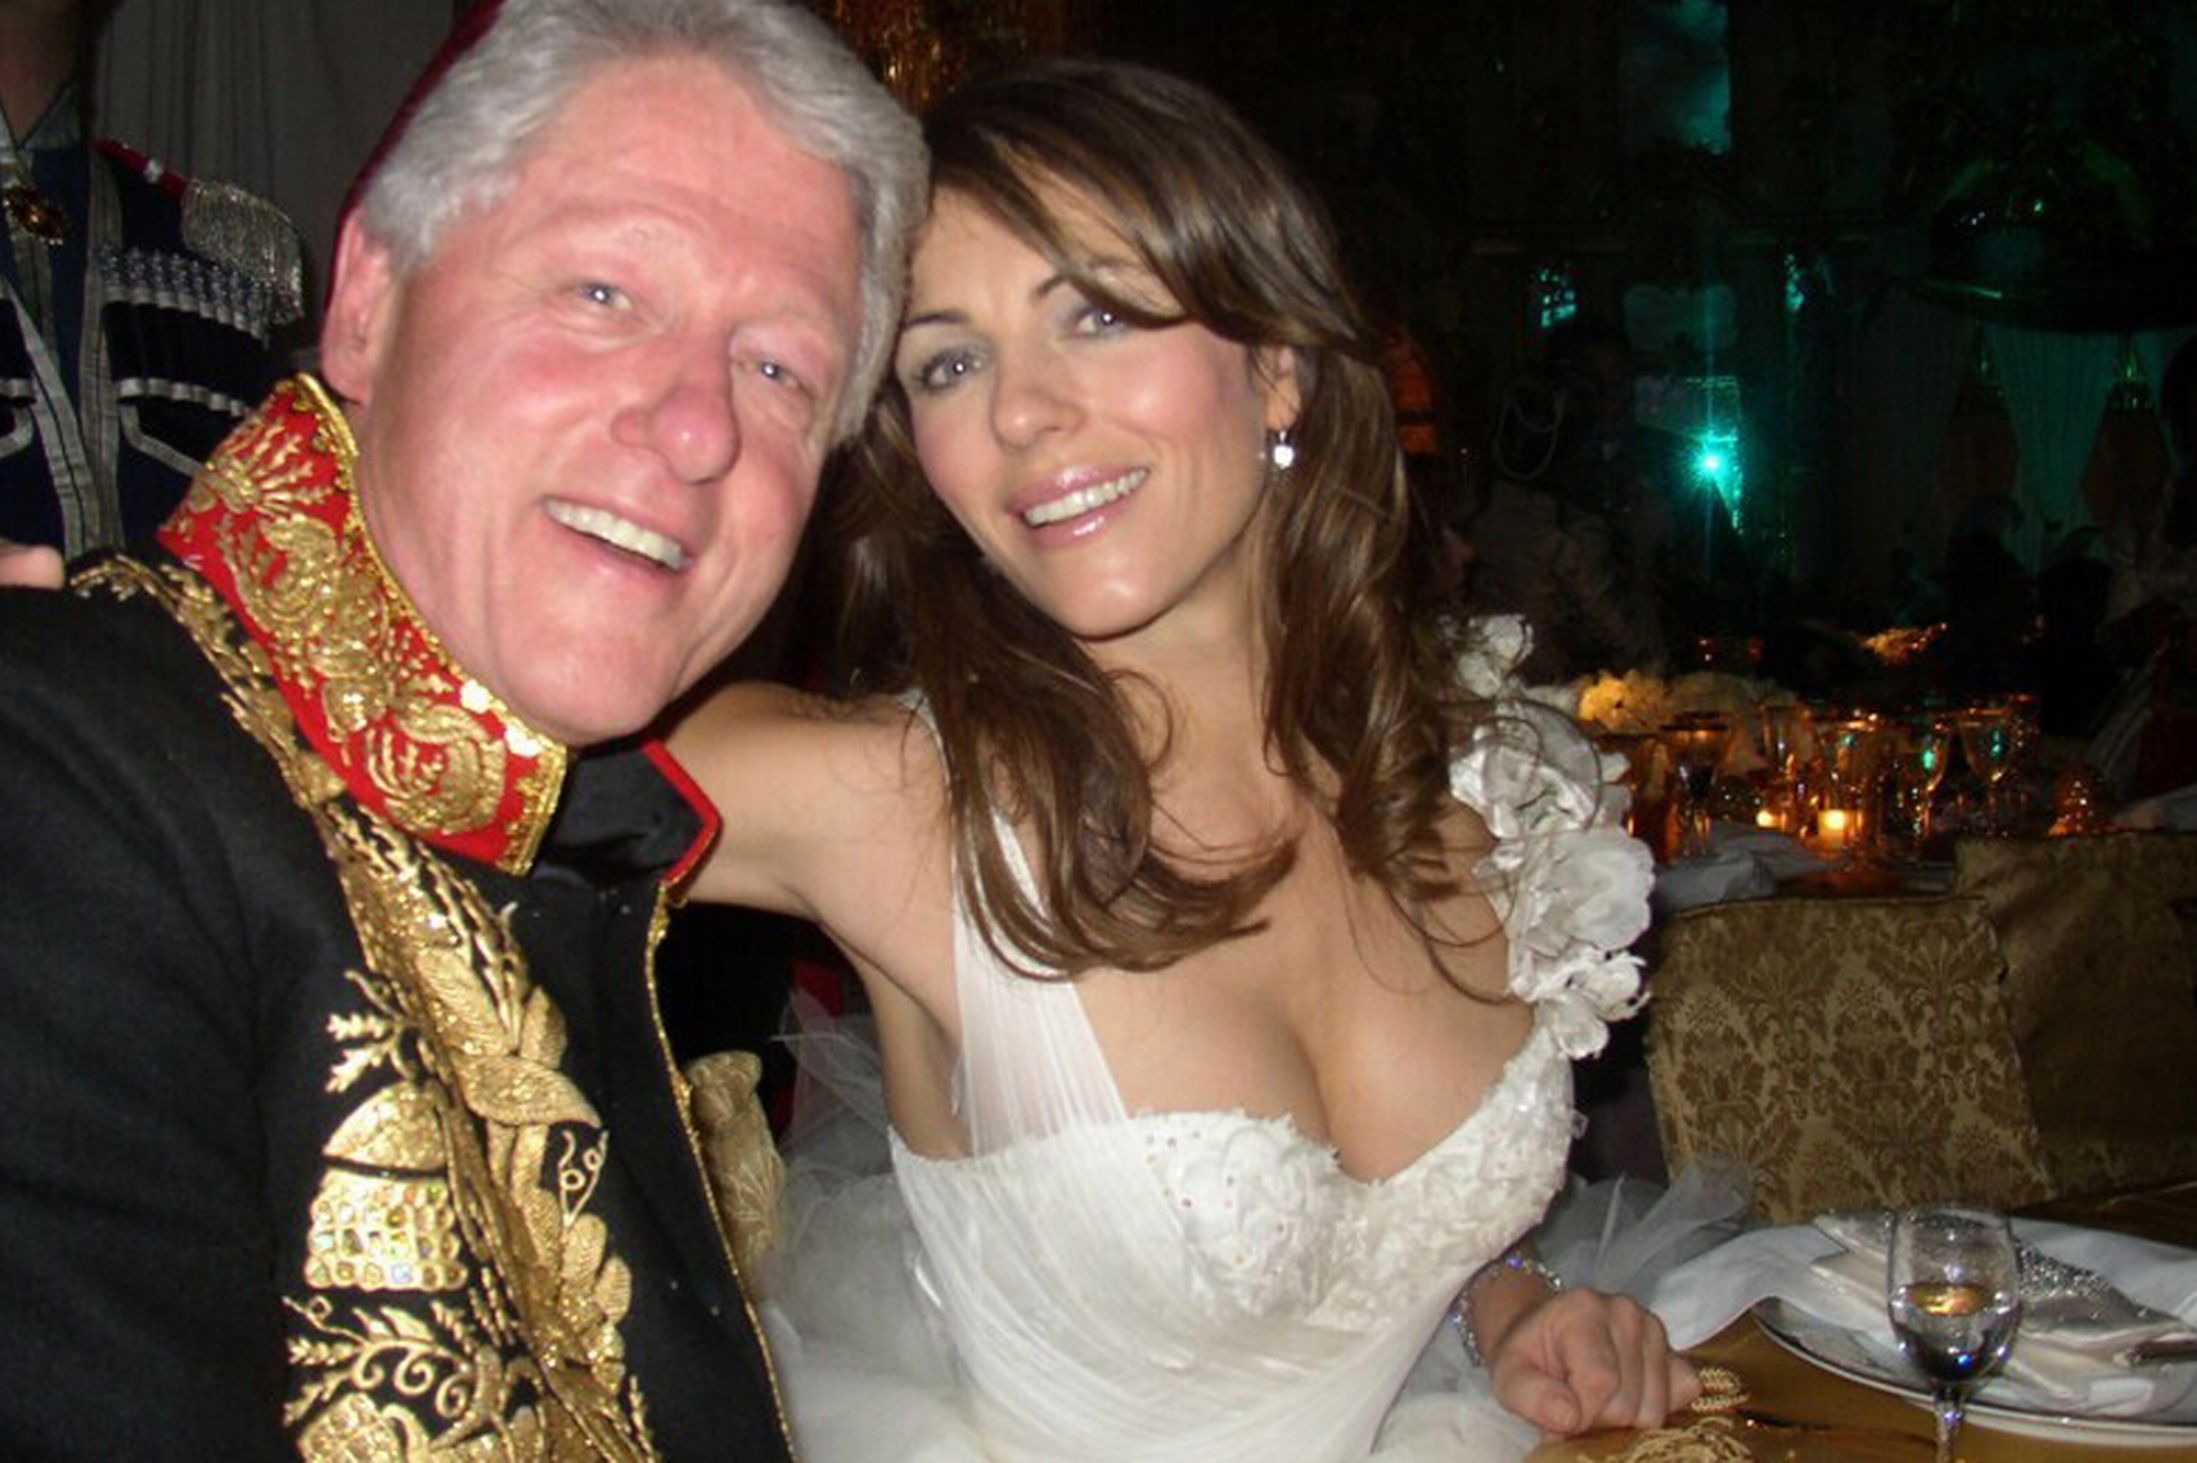 Bill-Clinton-and-Liz-Hurley-at-a-Charity-Ball-3114024.jpg